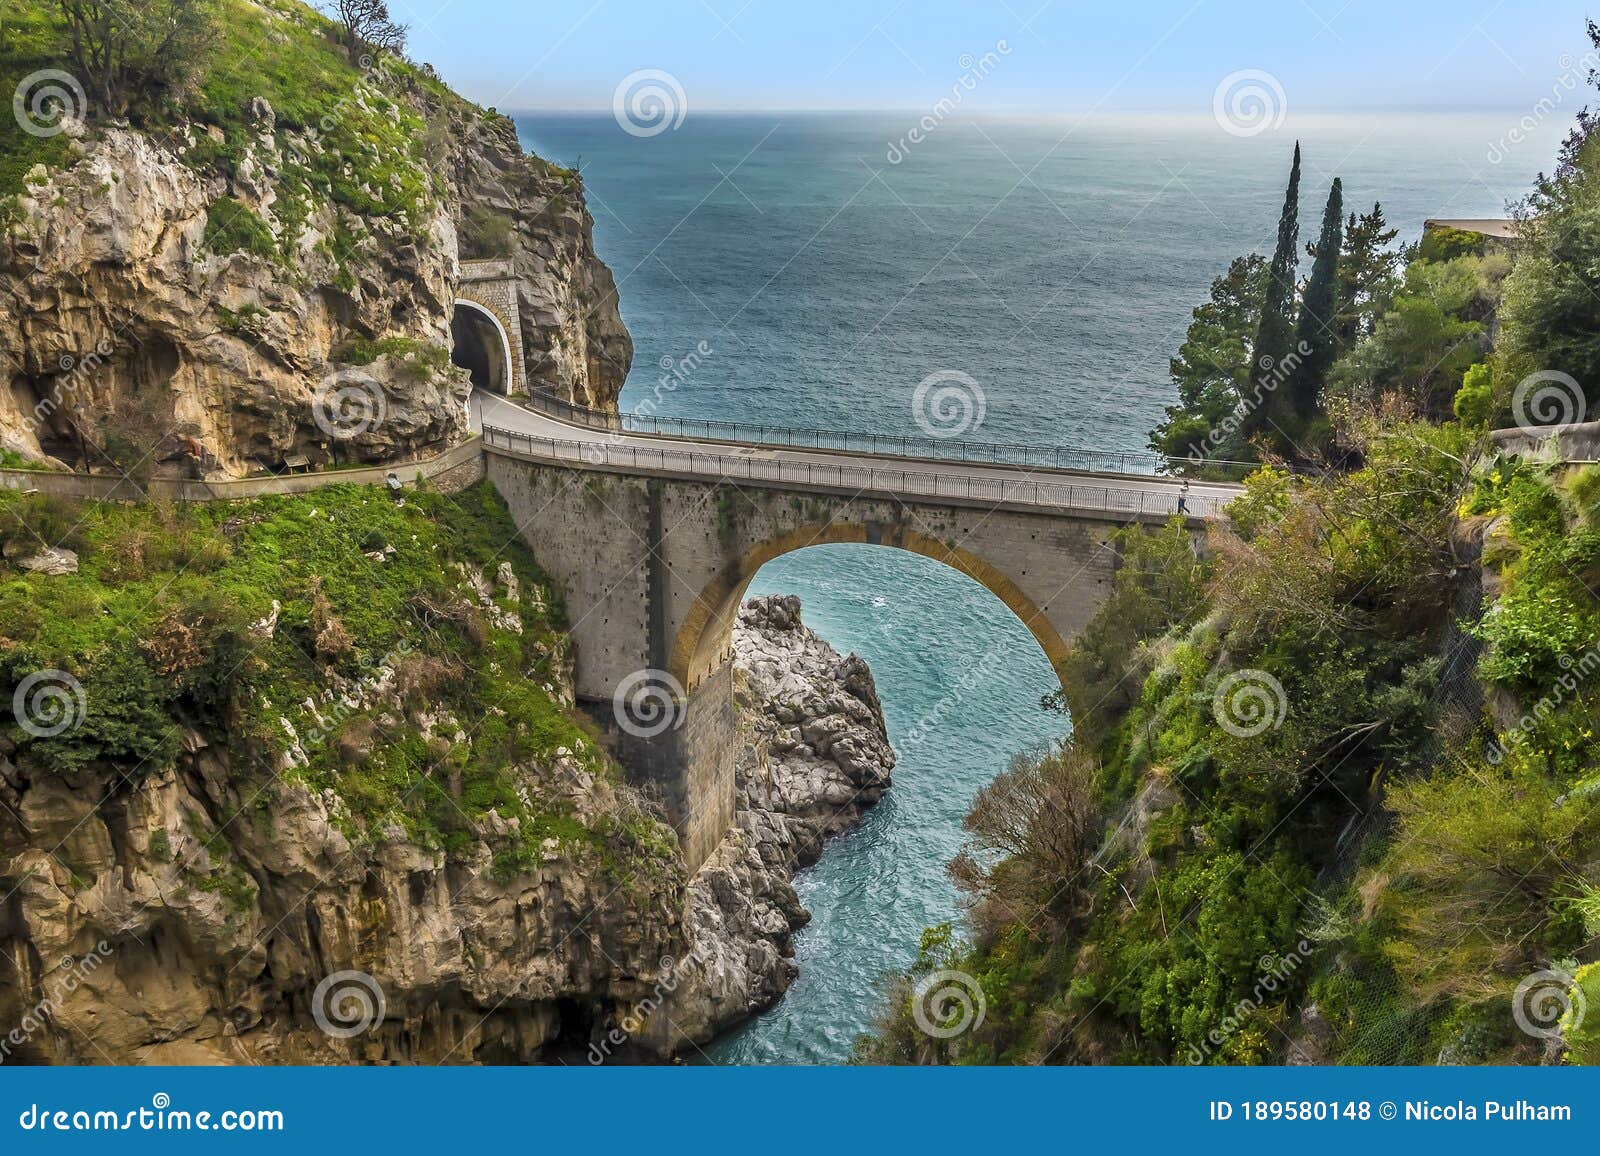 the arched bridge at fiordo di furore on the amalfi coast, italy on a sunny day